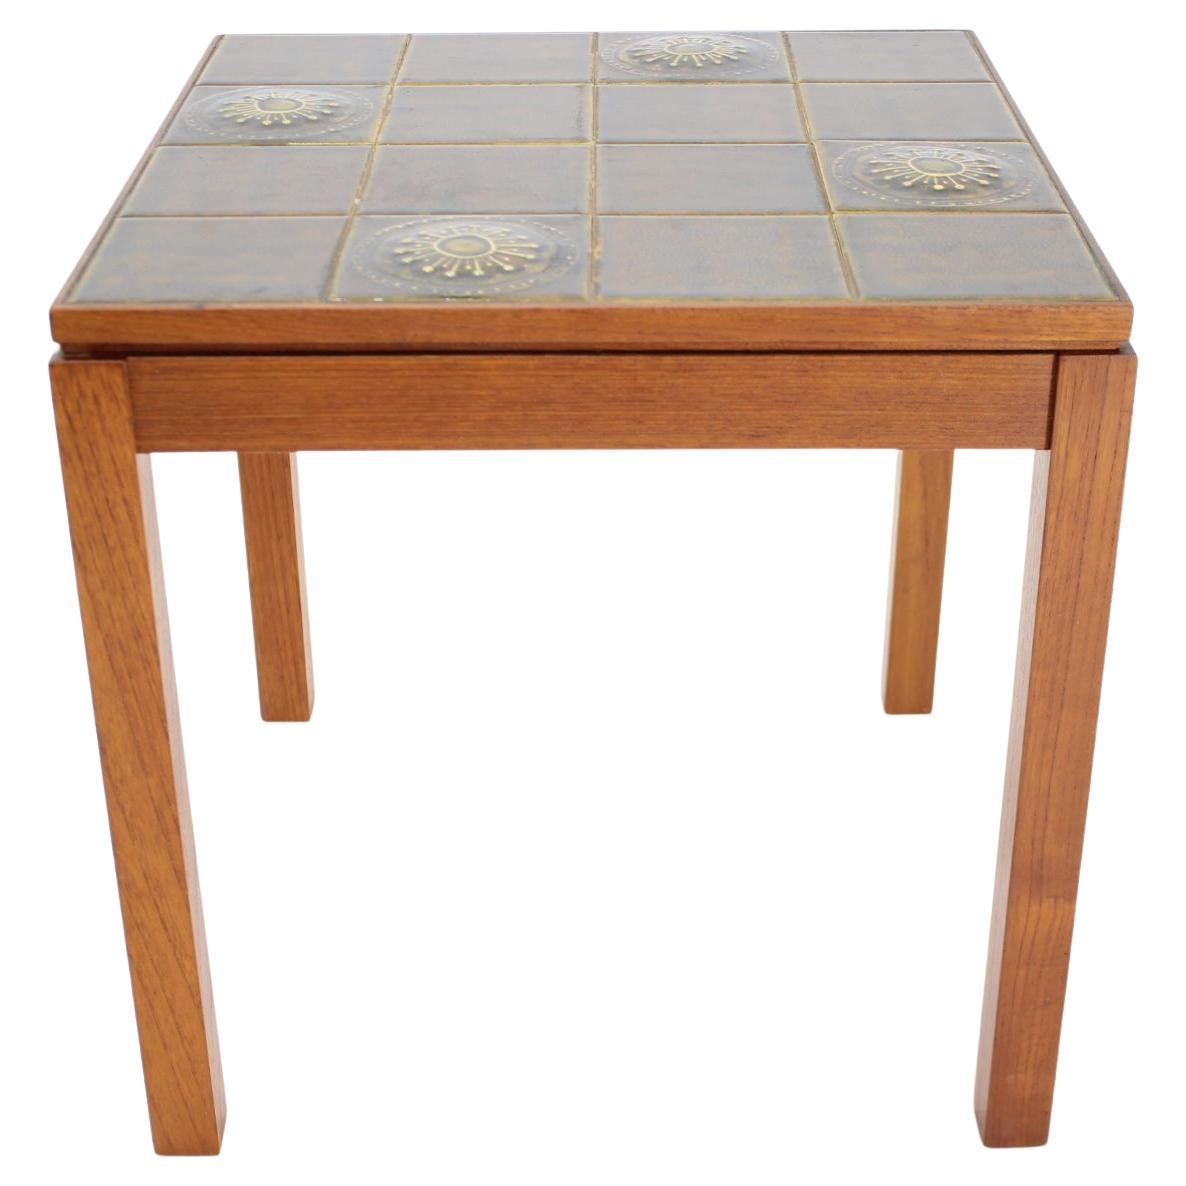 1960s Danish Teak and Tile Side Table